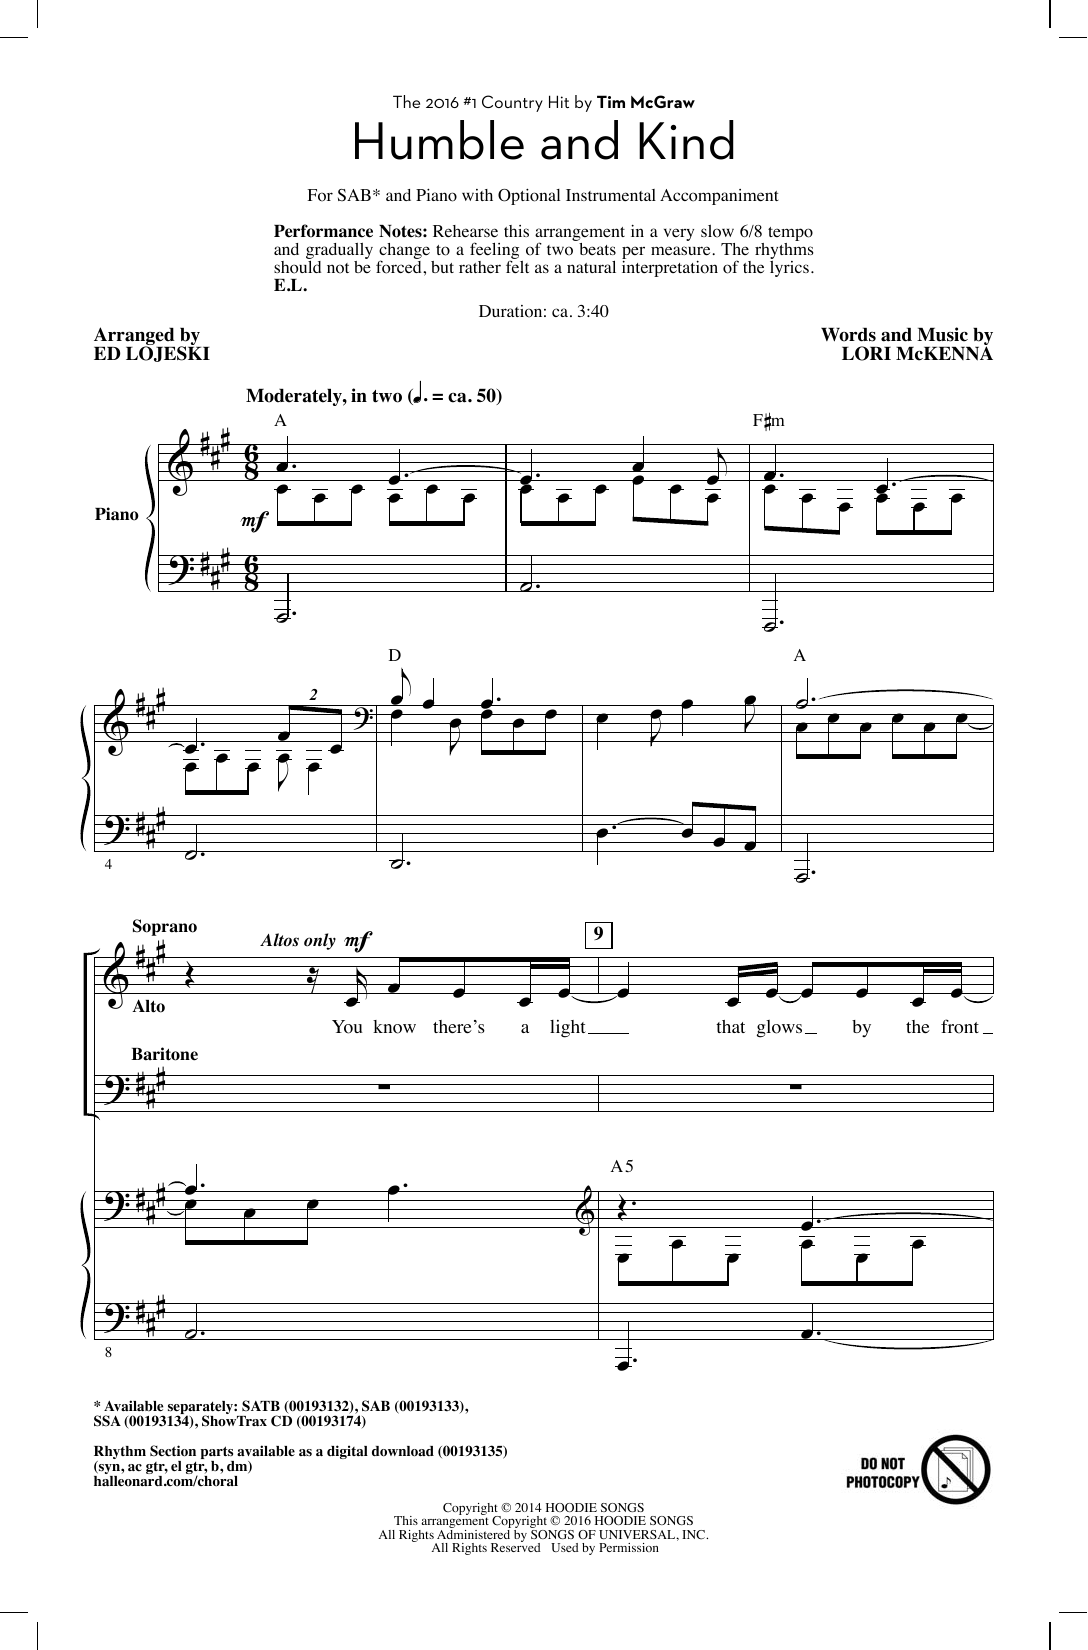 Tim McGraw Humble And Kind (arr. Ed Lojeski) Sheet Music Notes & Chords for SAB - Download or Print PDF